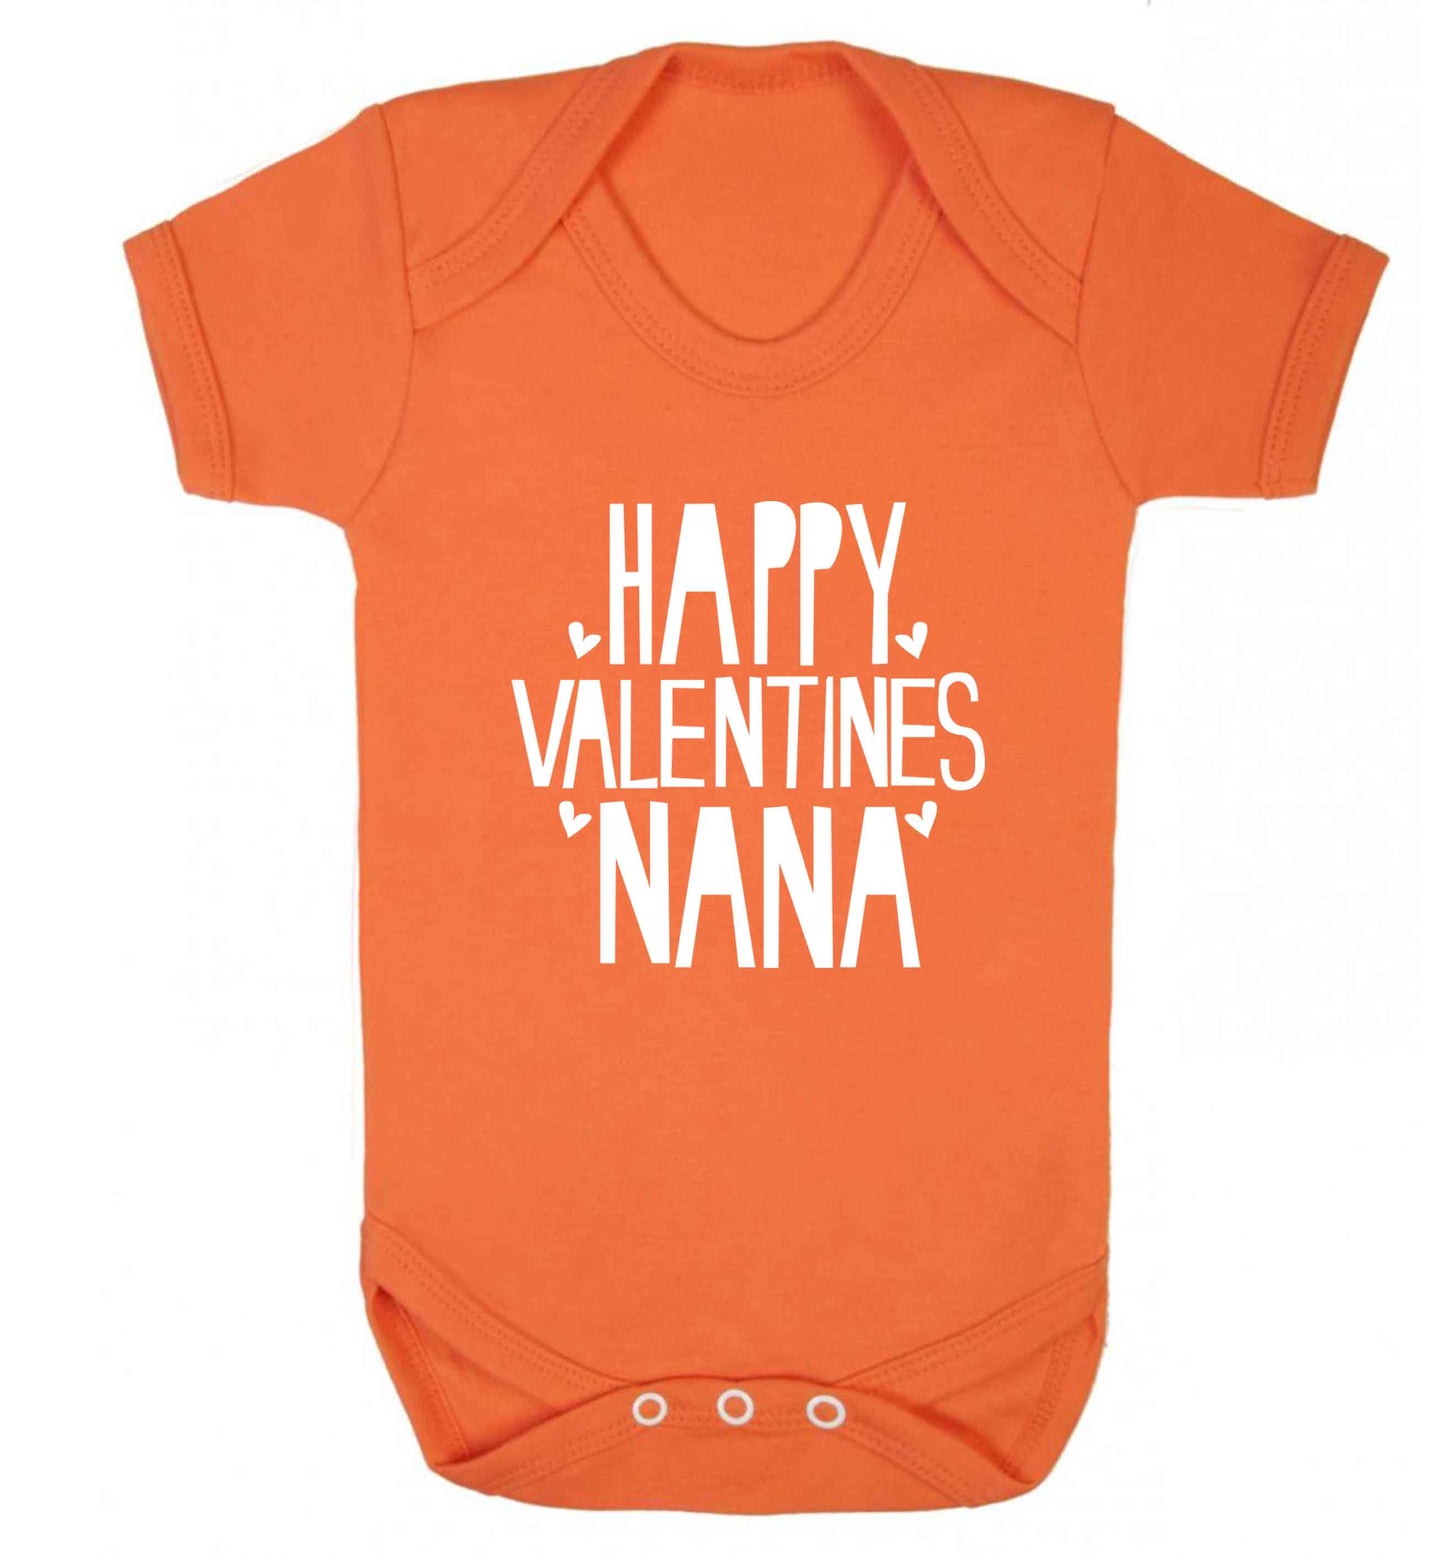 Happy valentines nana baby vest orange 18-24 months